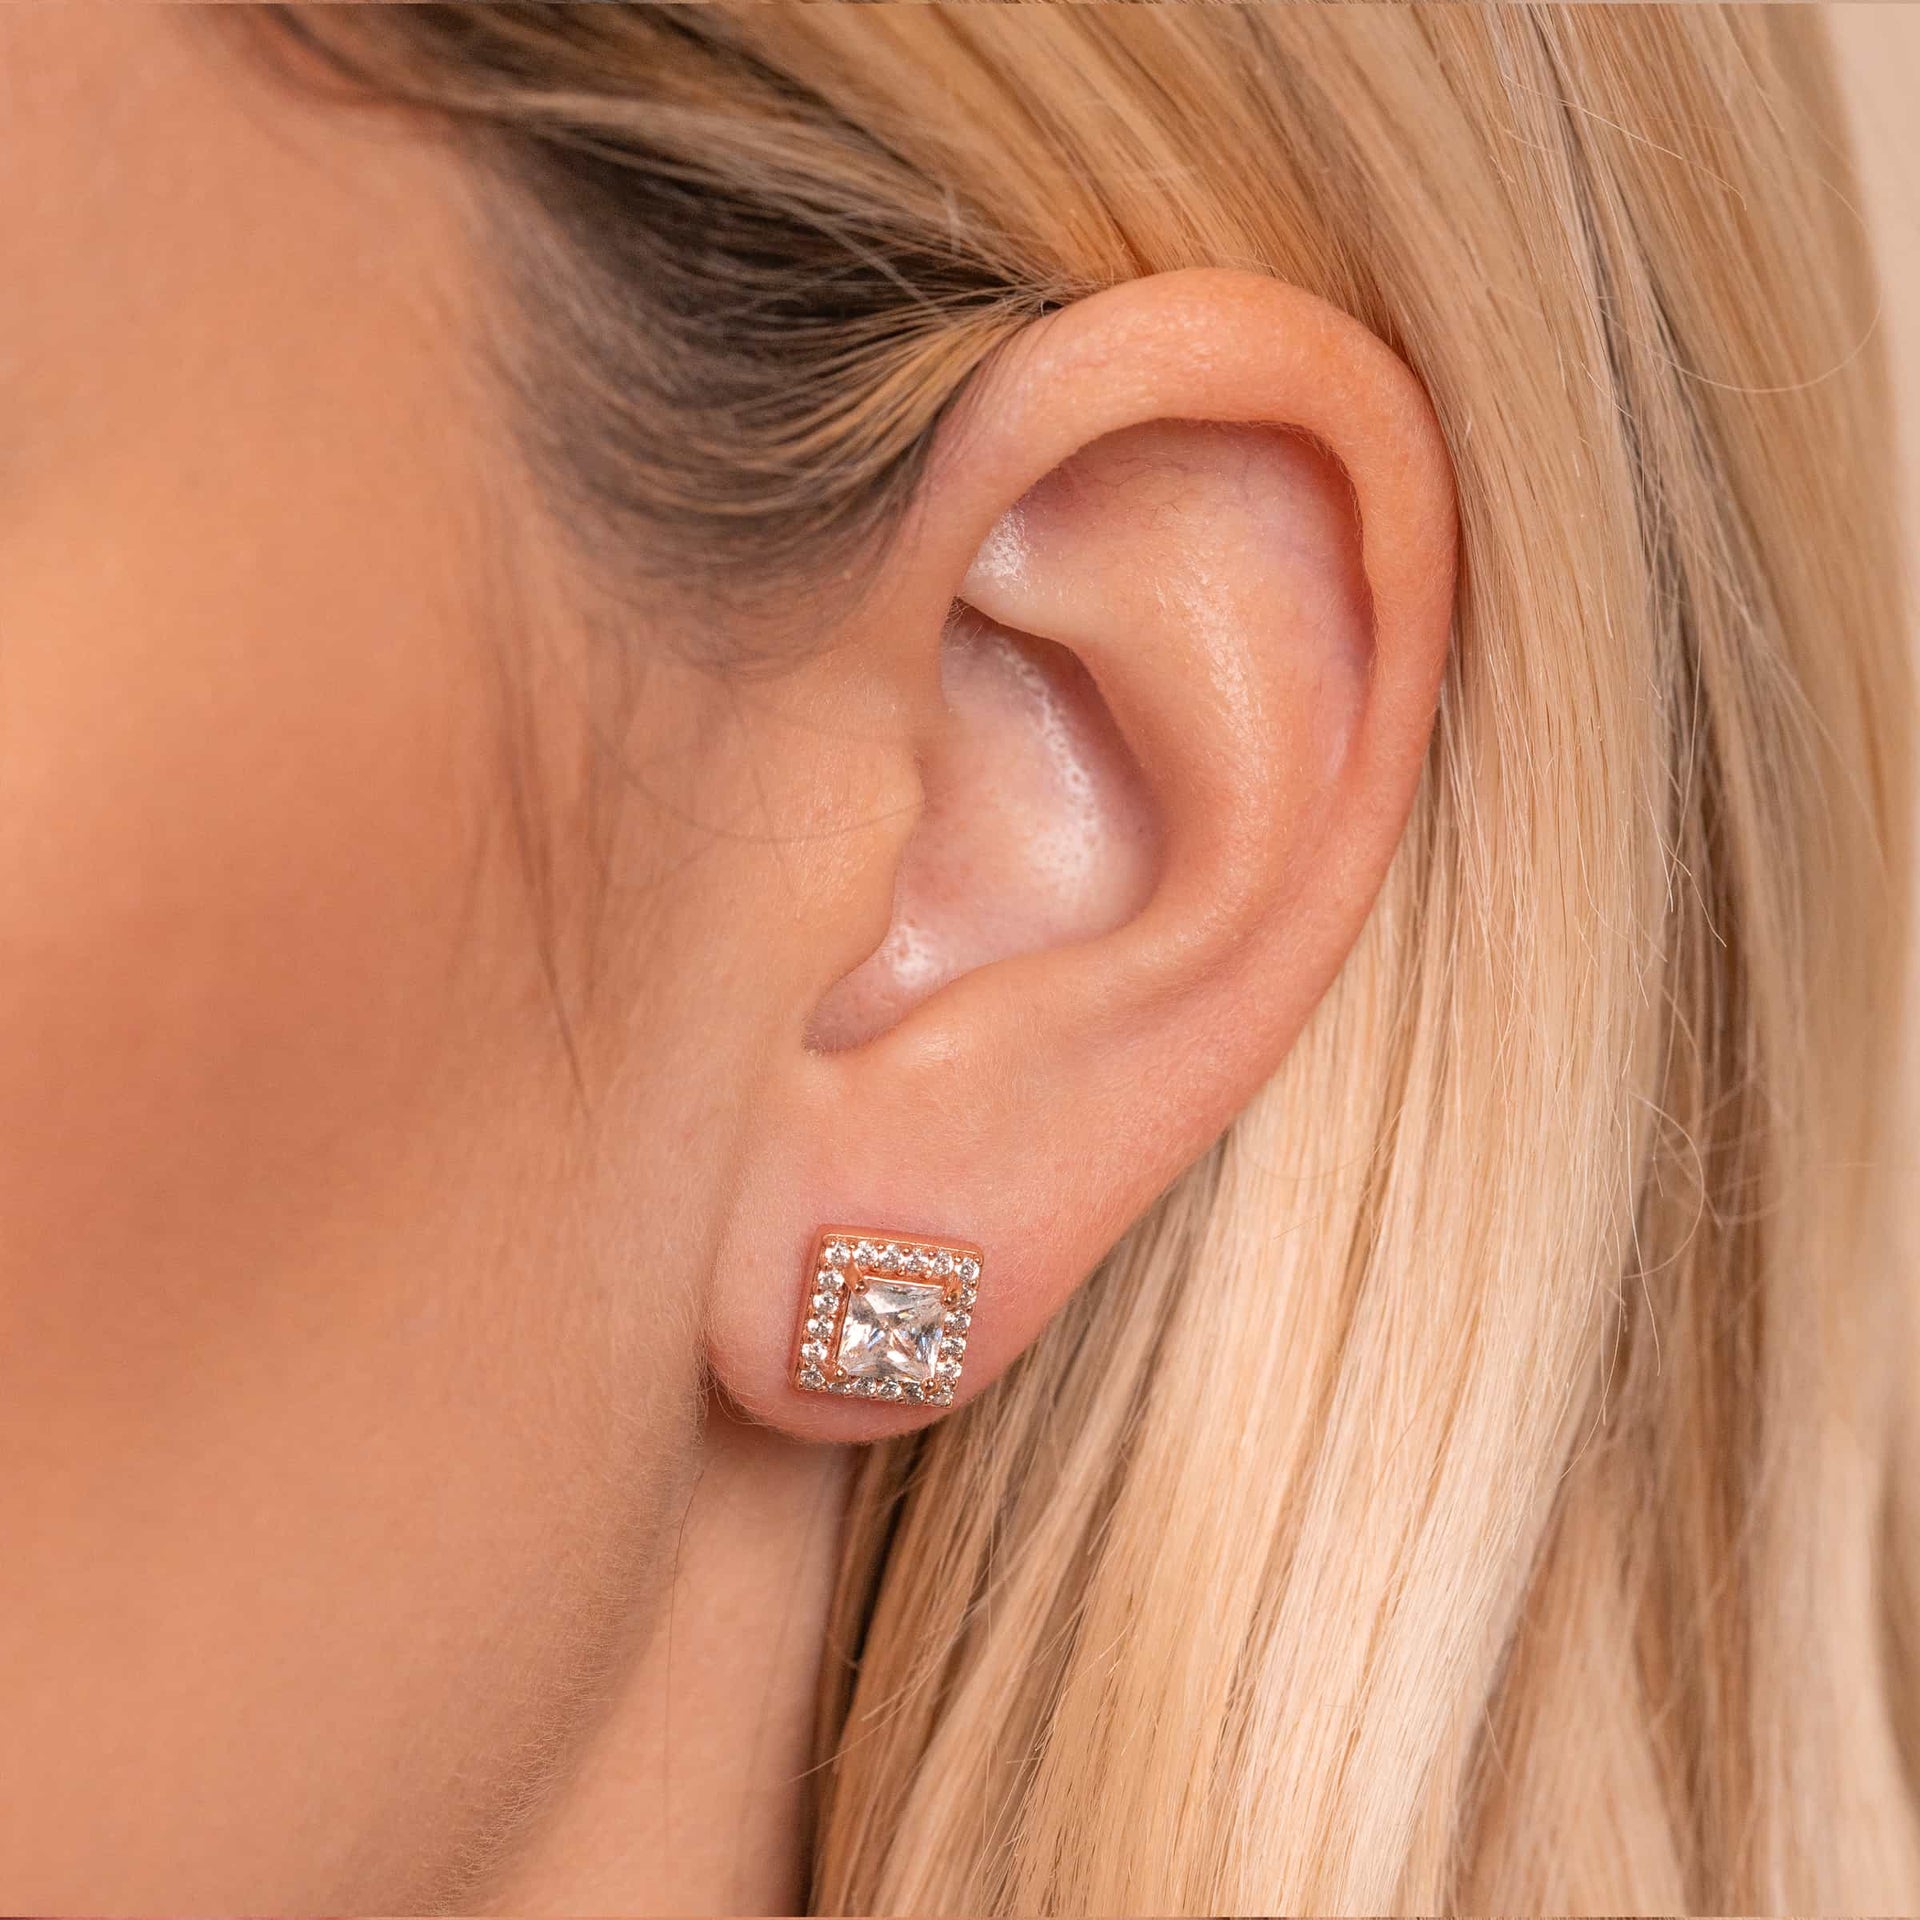 Square rose gold stone earrings